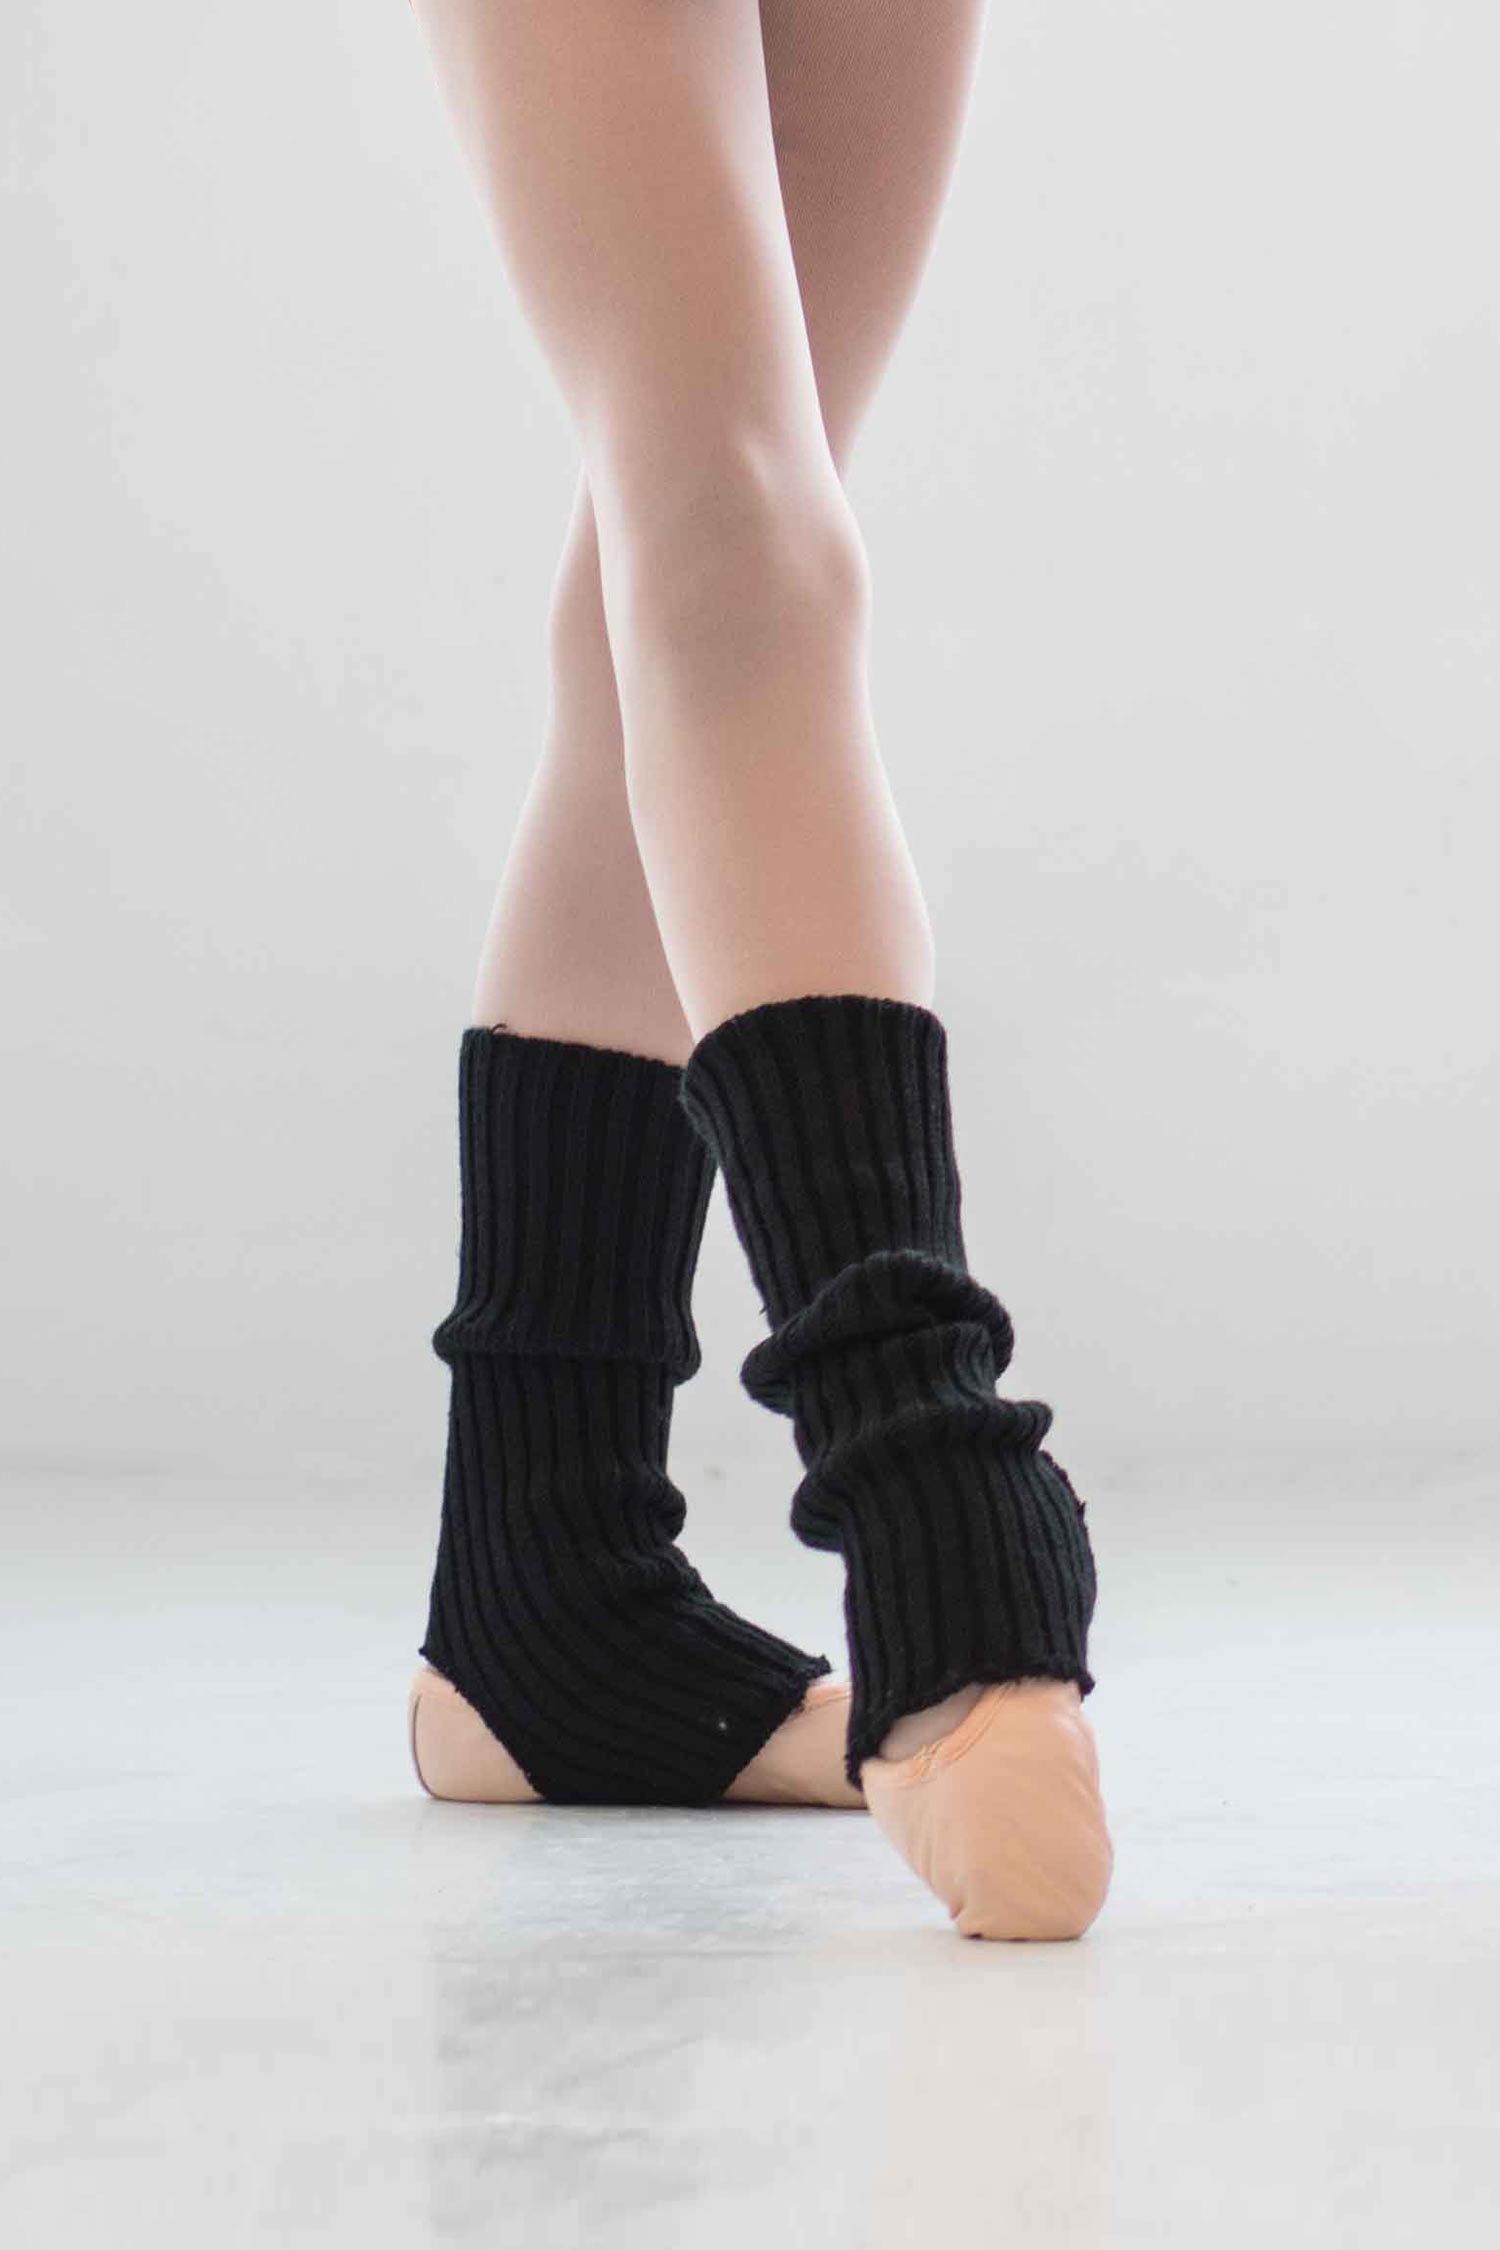 Intermezzo precal short legwarmer from The Collective Dancewear